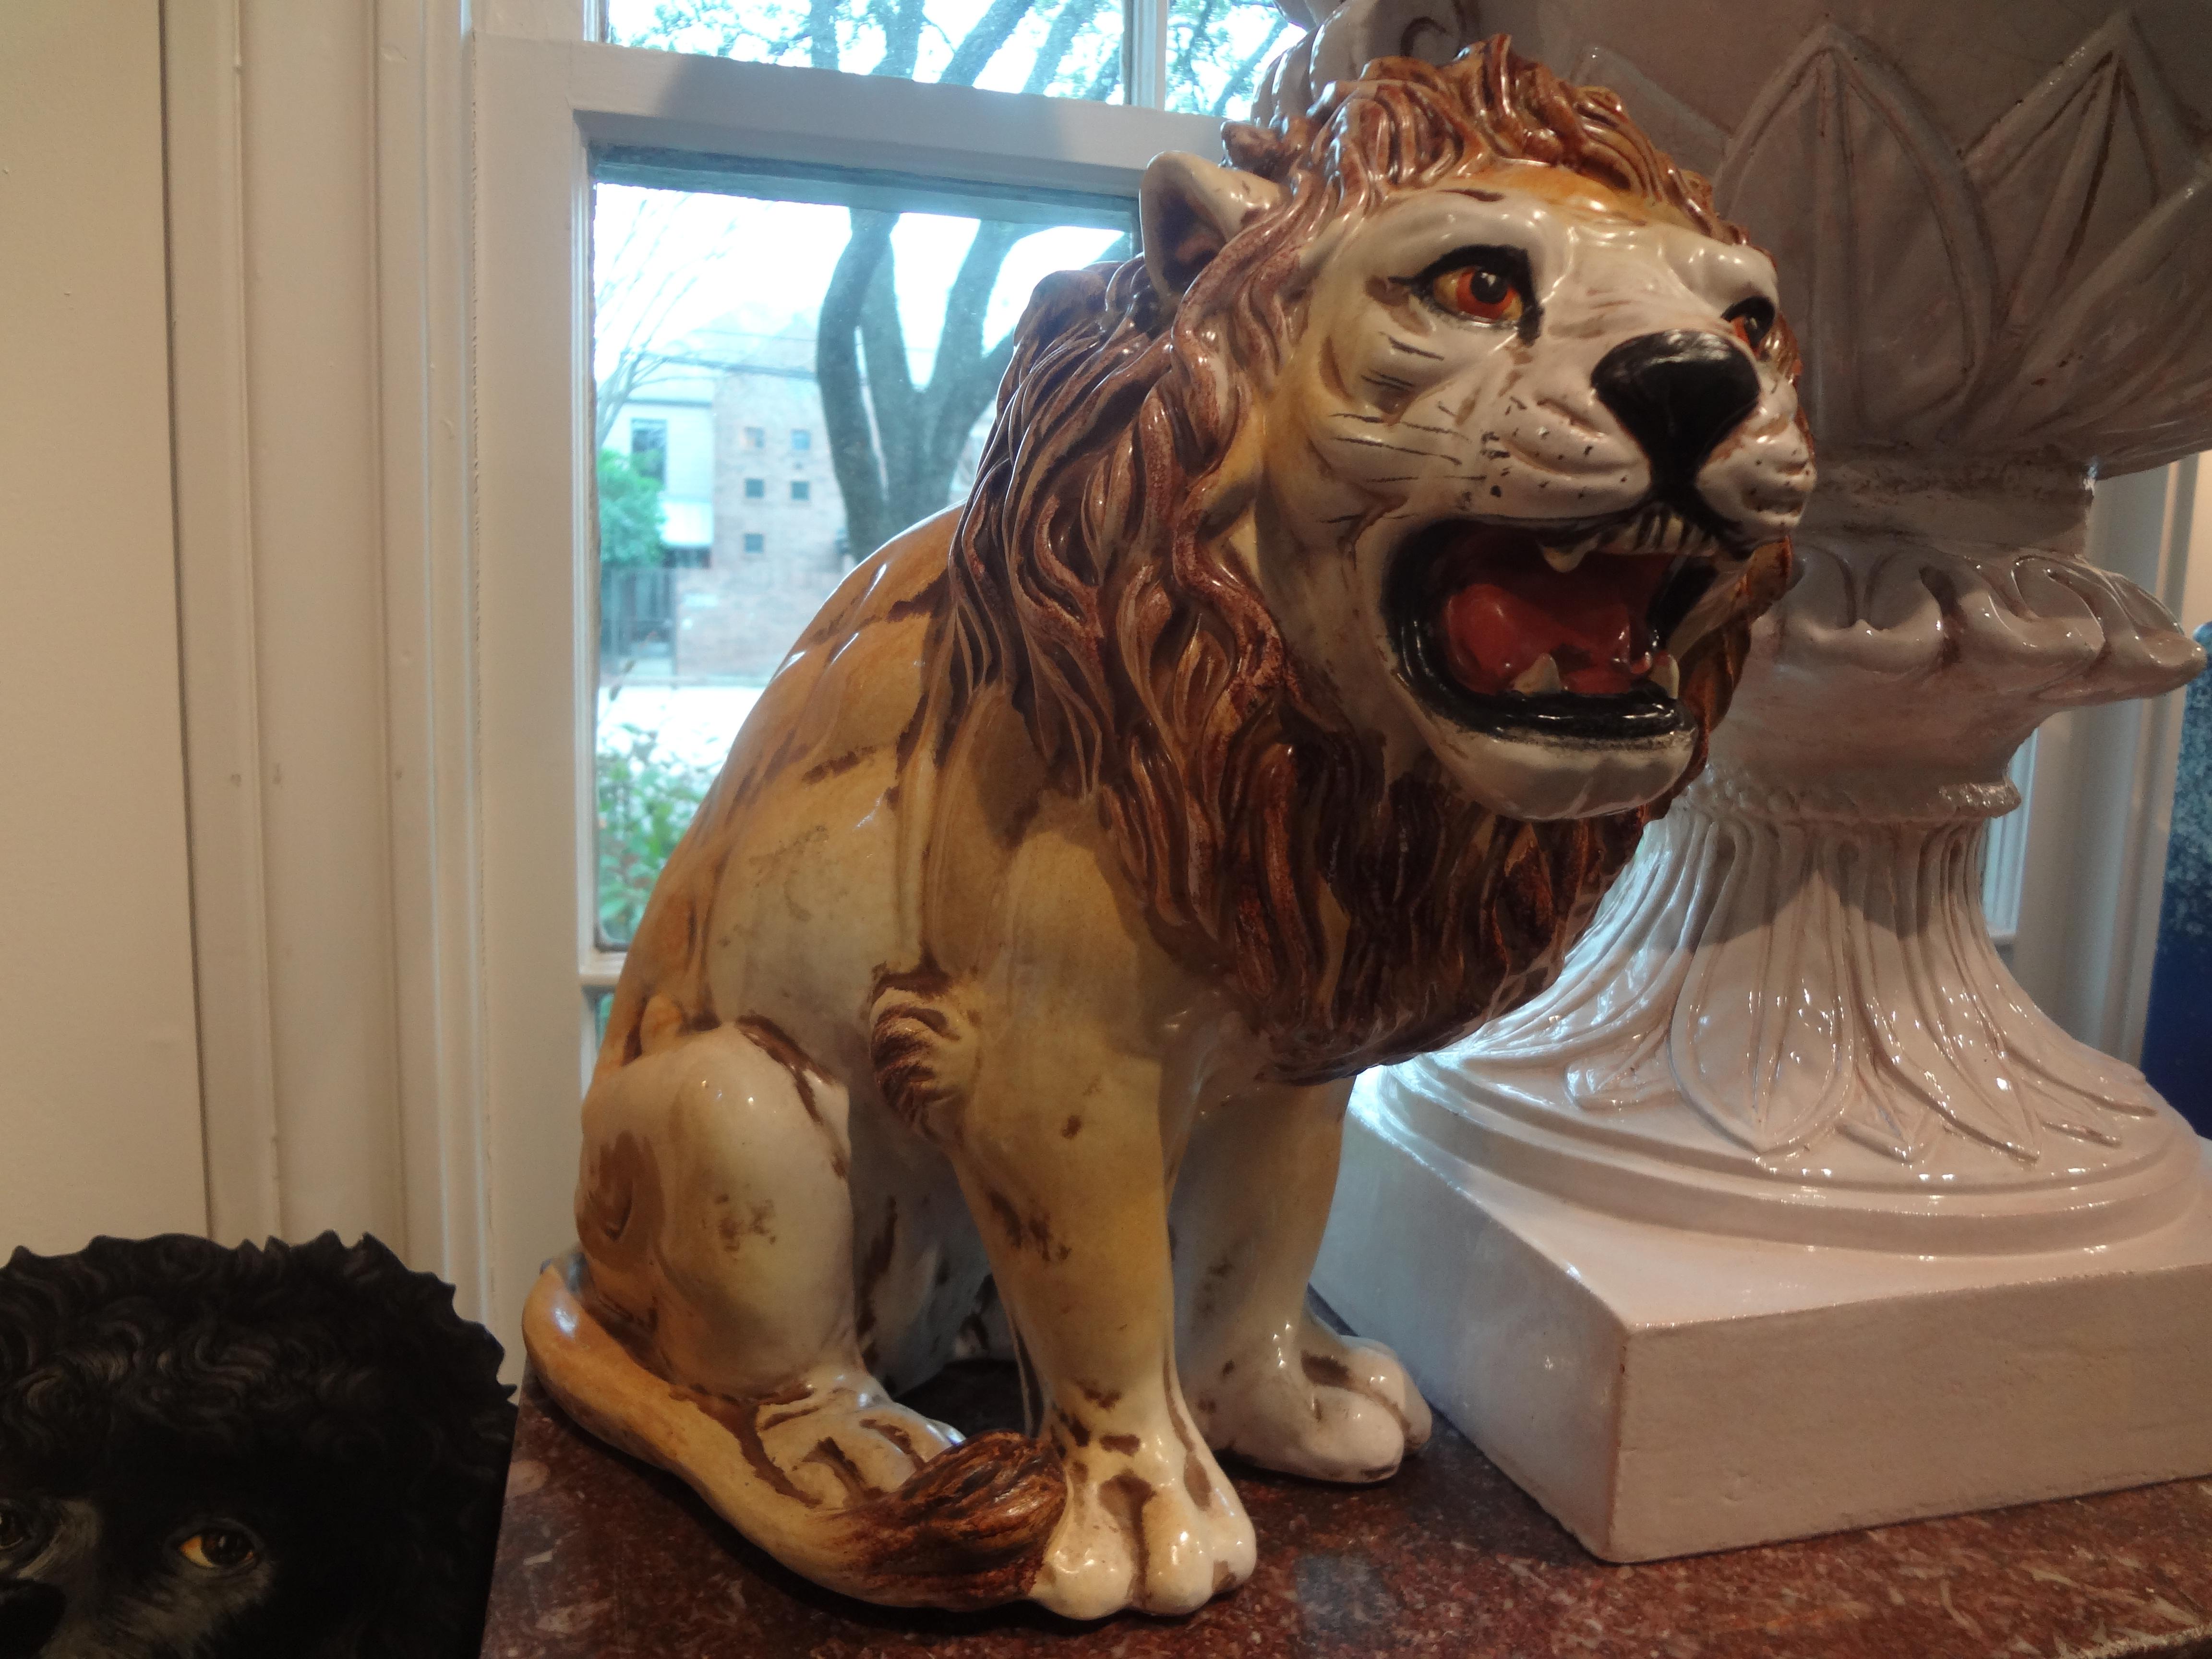 Hollywood Regency Italian glazed Terracotta Lion.
Great Hollywood Regency Italian glazed terracotta lion figure or statue. Realistic Italian glazed terracotta animal sculpture of a lion. Beautiful details.